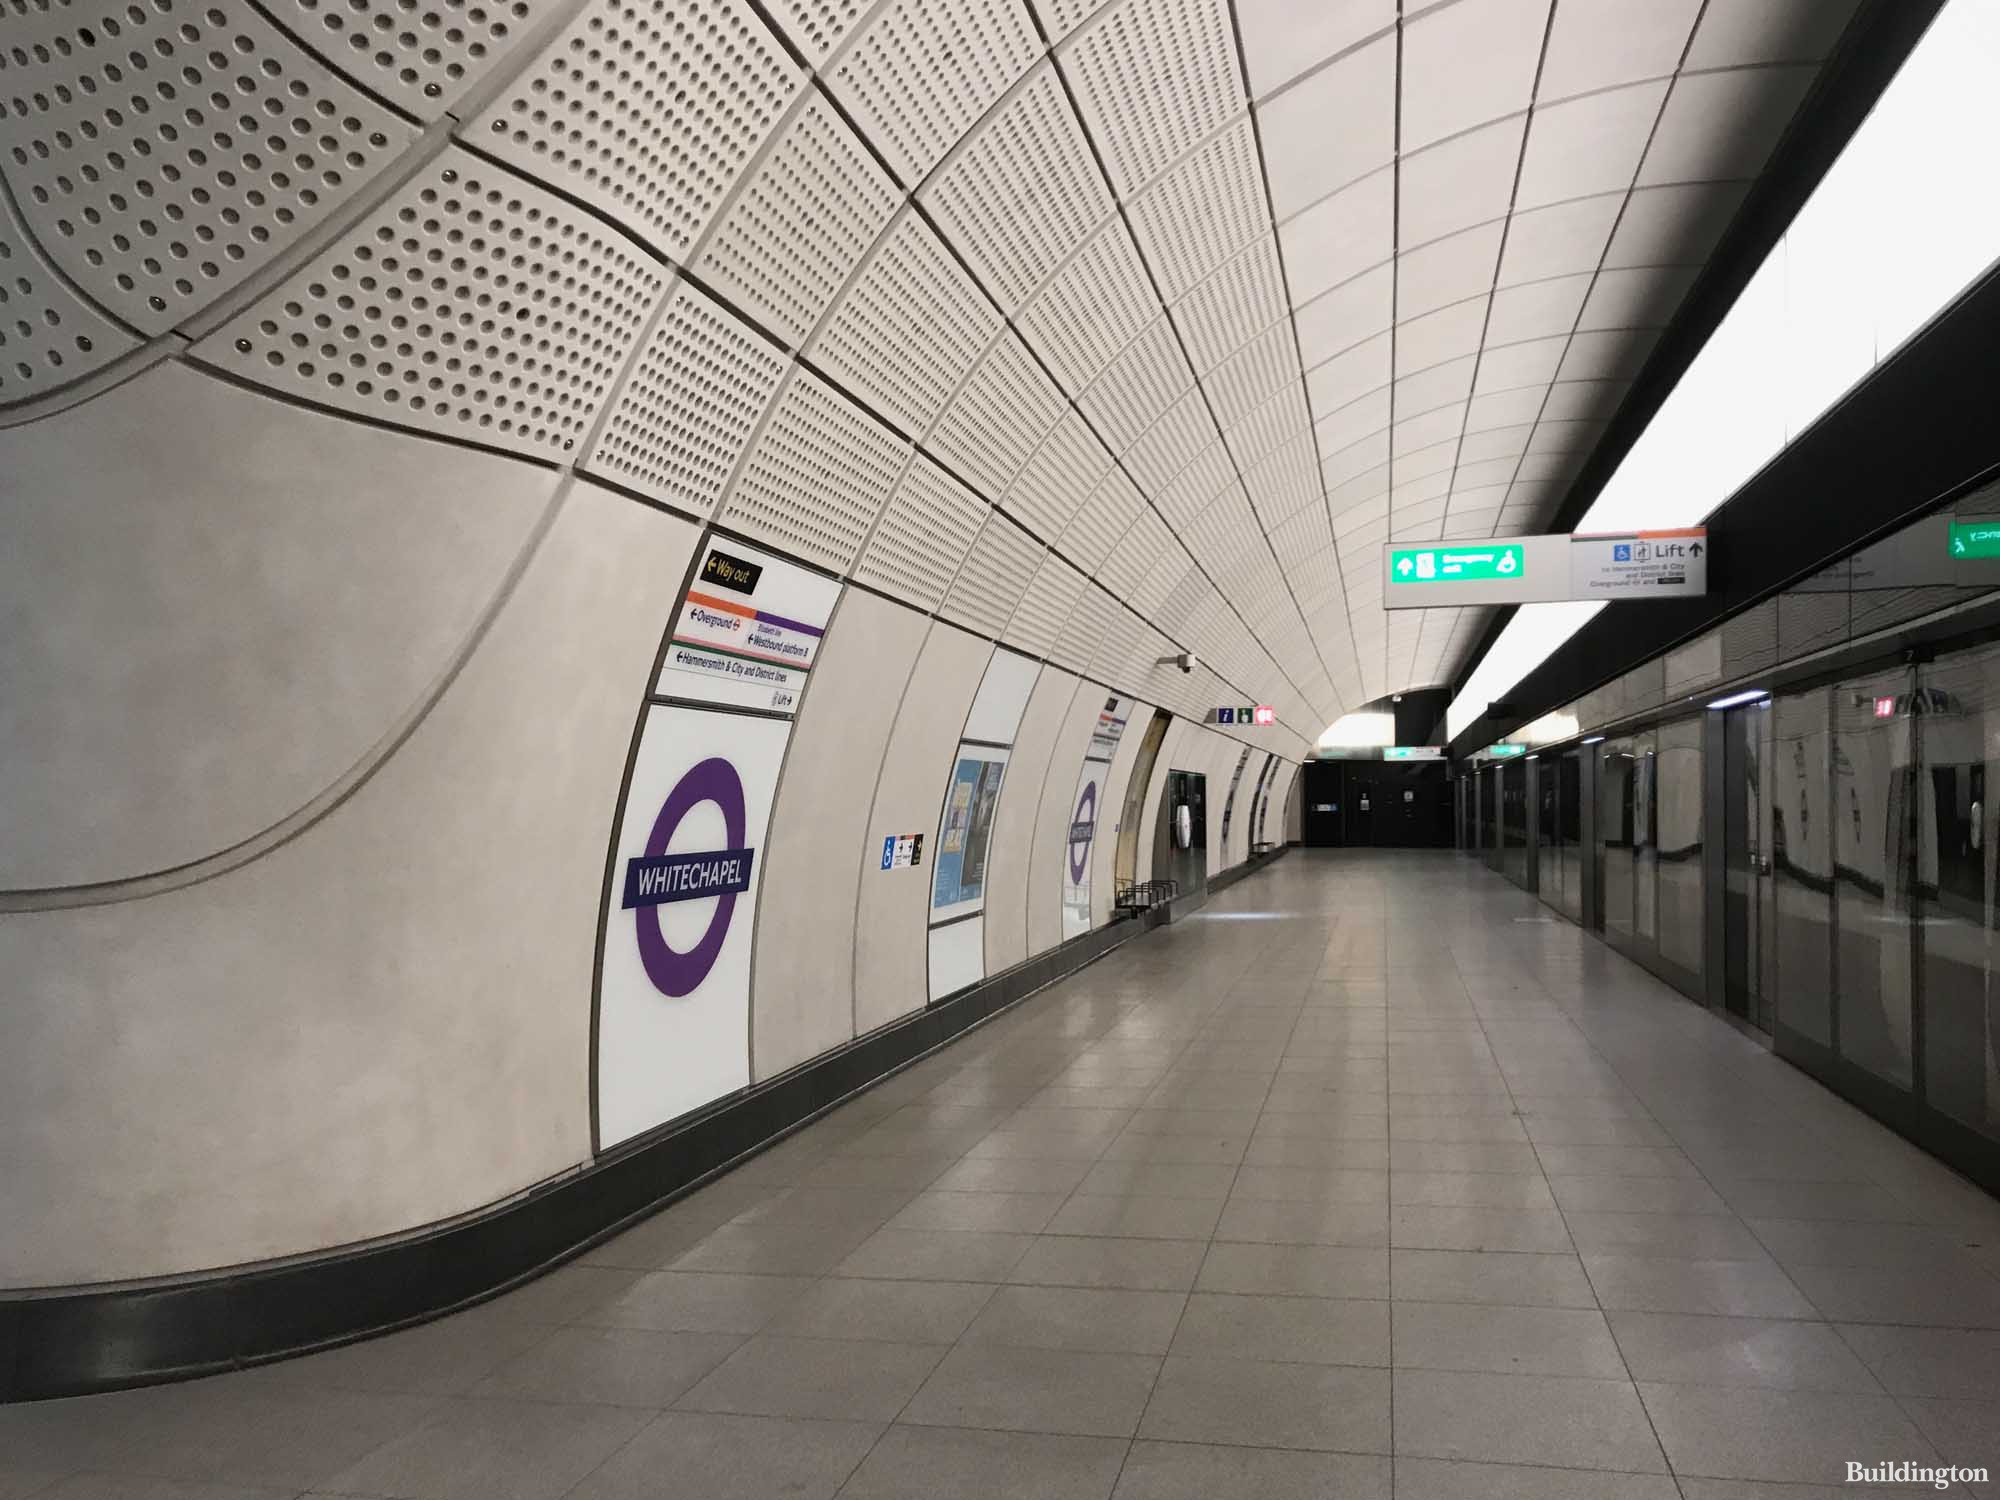 Whitechapel Station crossrail Elizabeth Line platform interior in London E1.